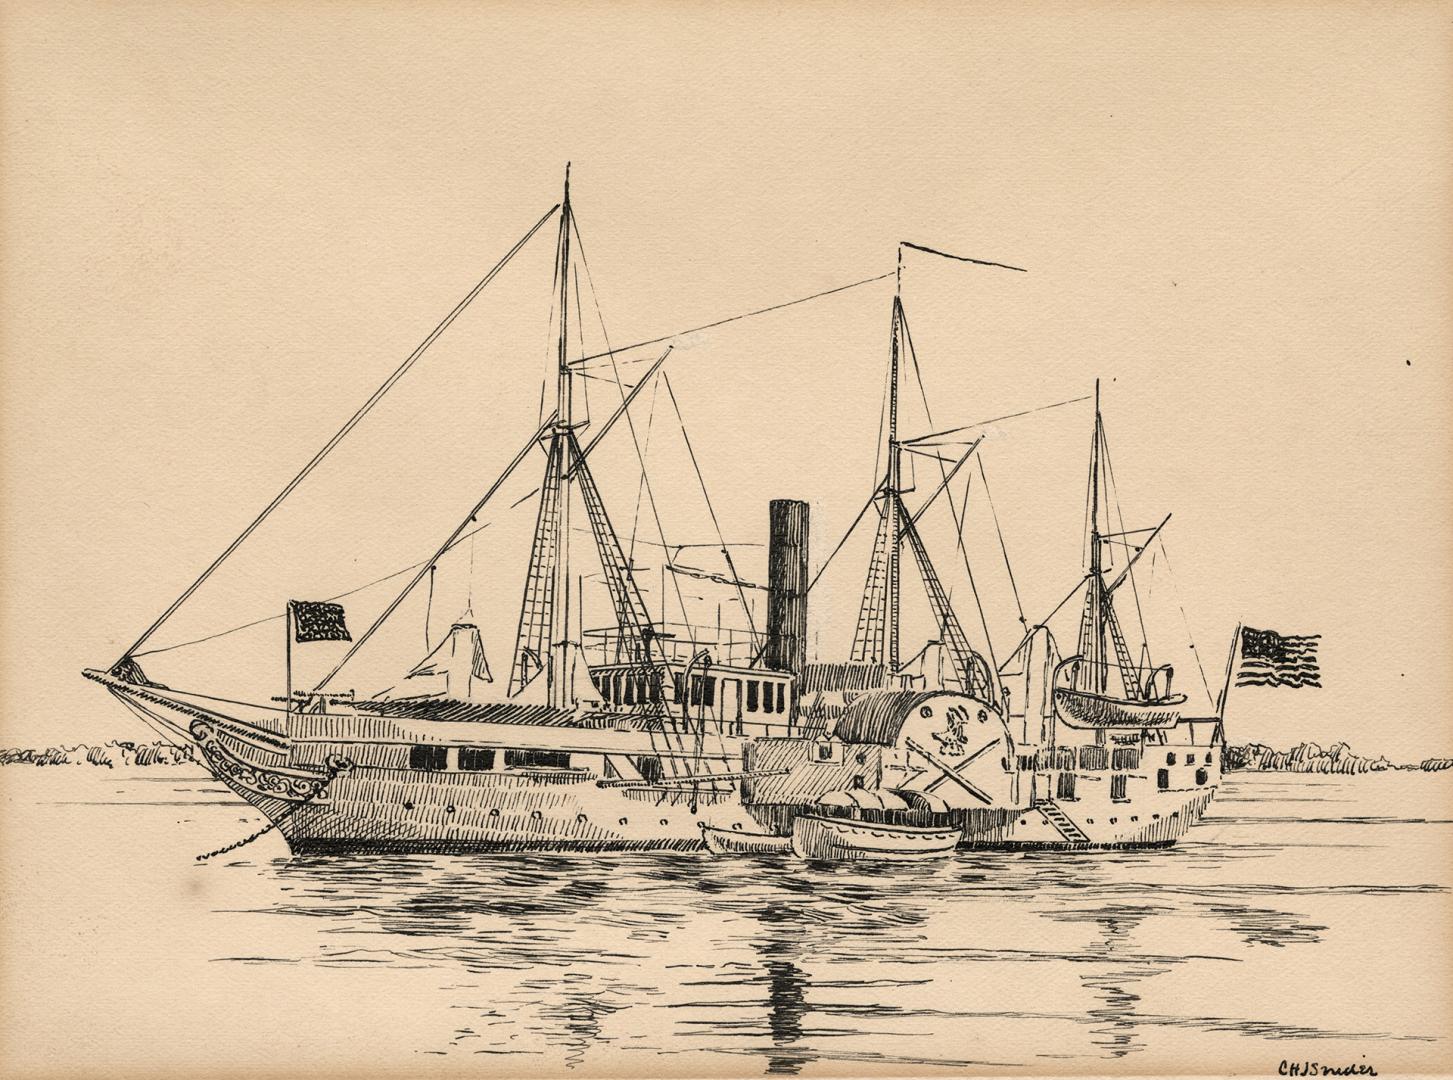 U.S. Gunboat "Michigan", 1843-1905; Later "Wolverine", 1905-49 (Great Lakes)